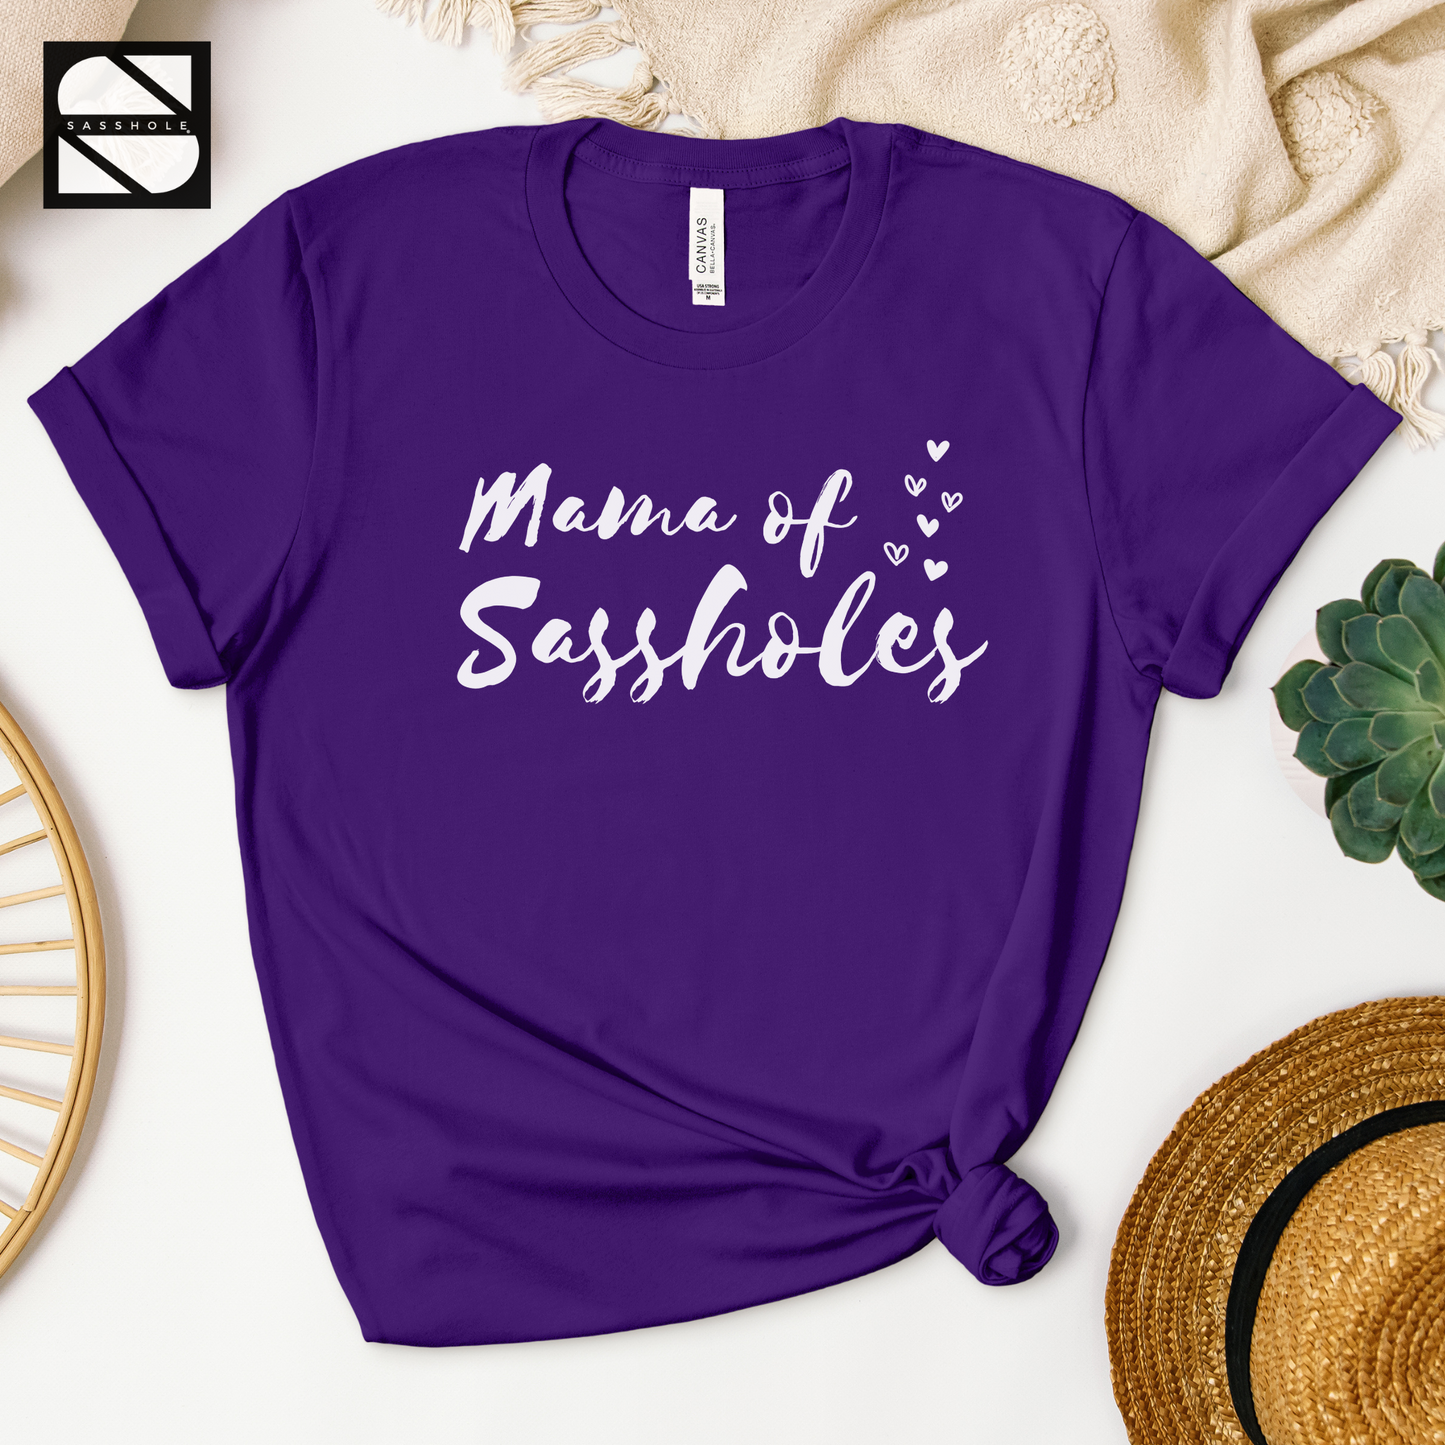 women's shirts funny team purple